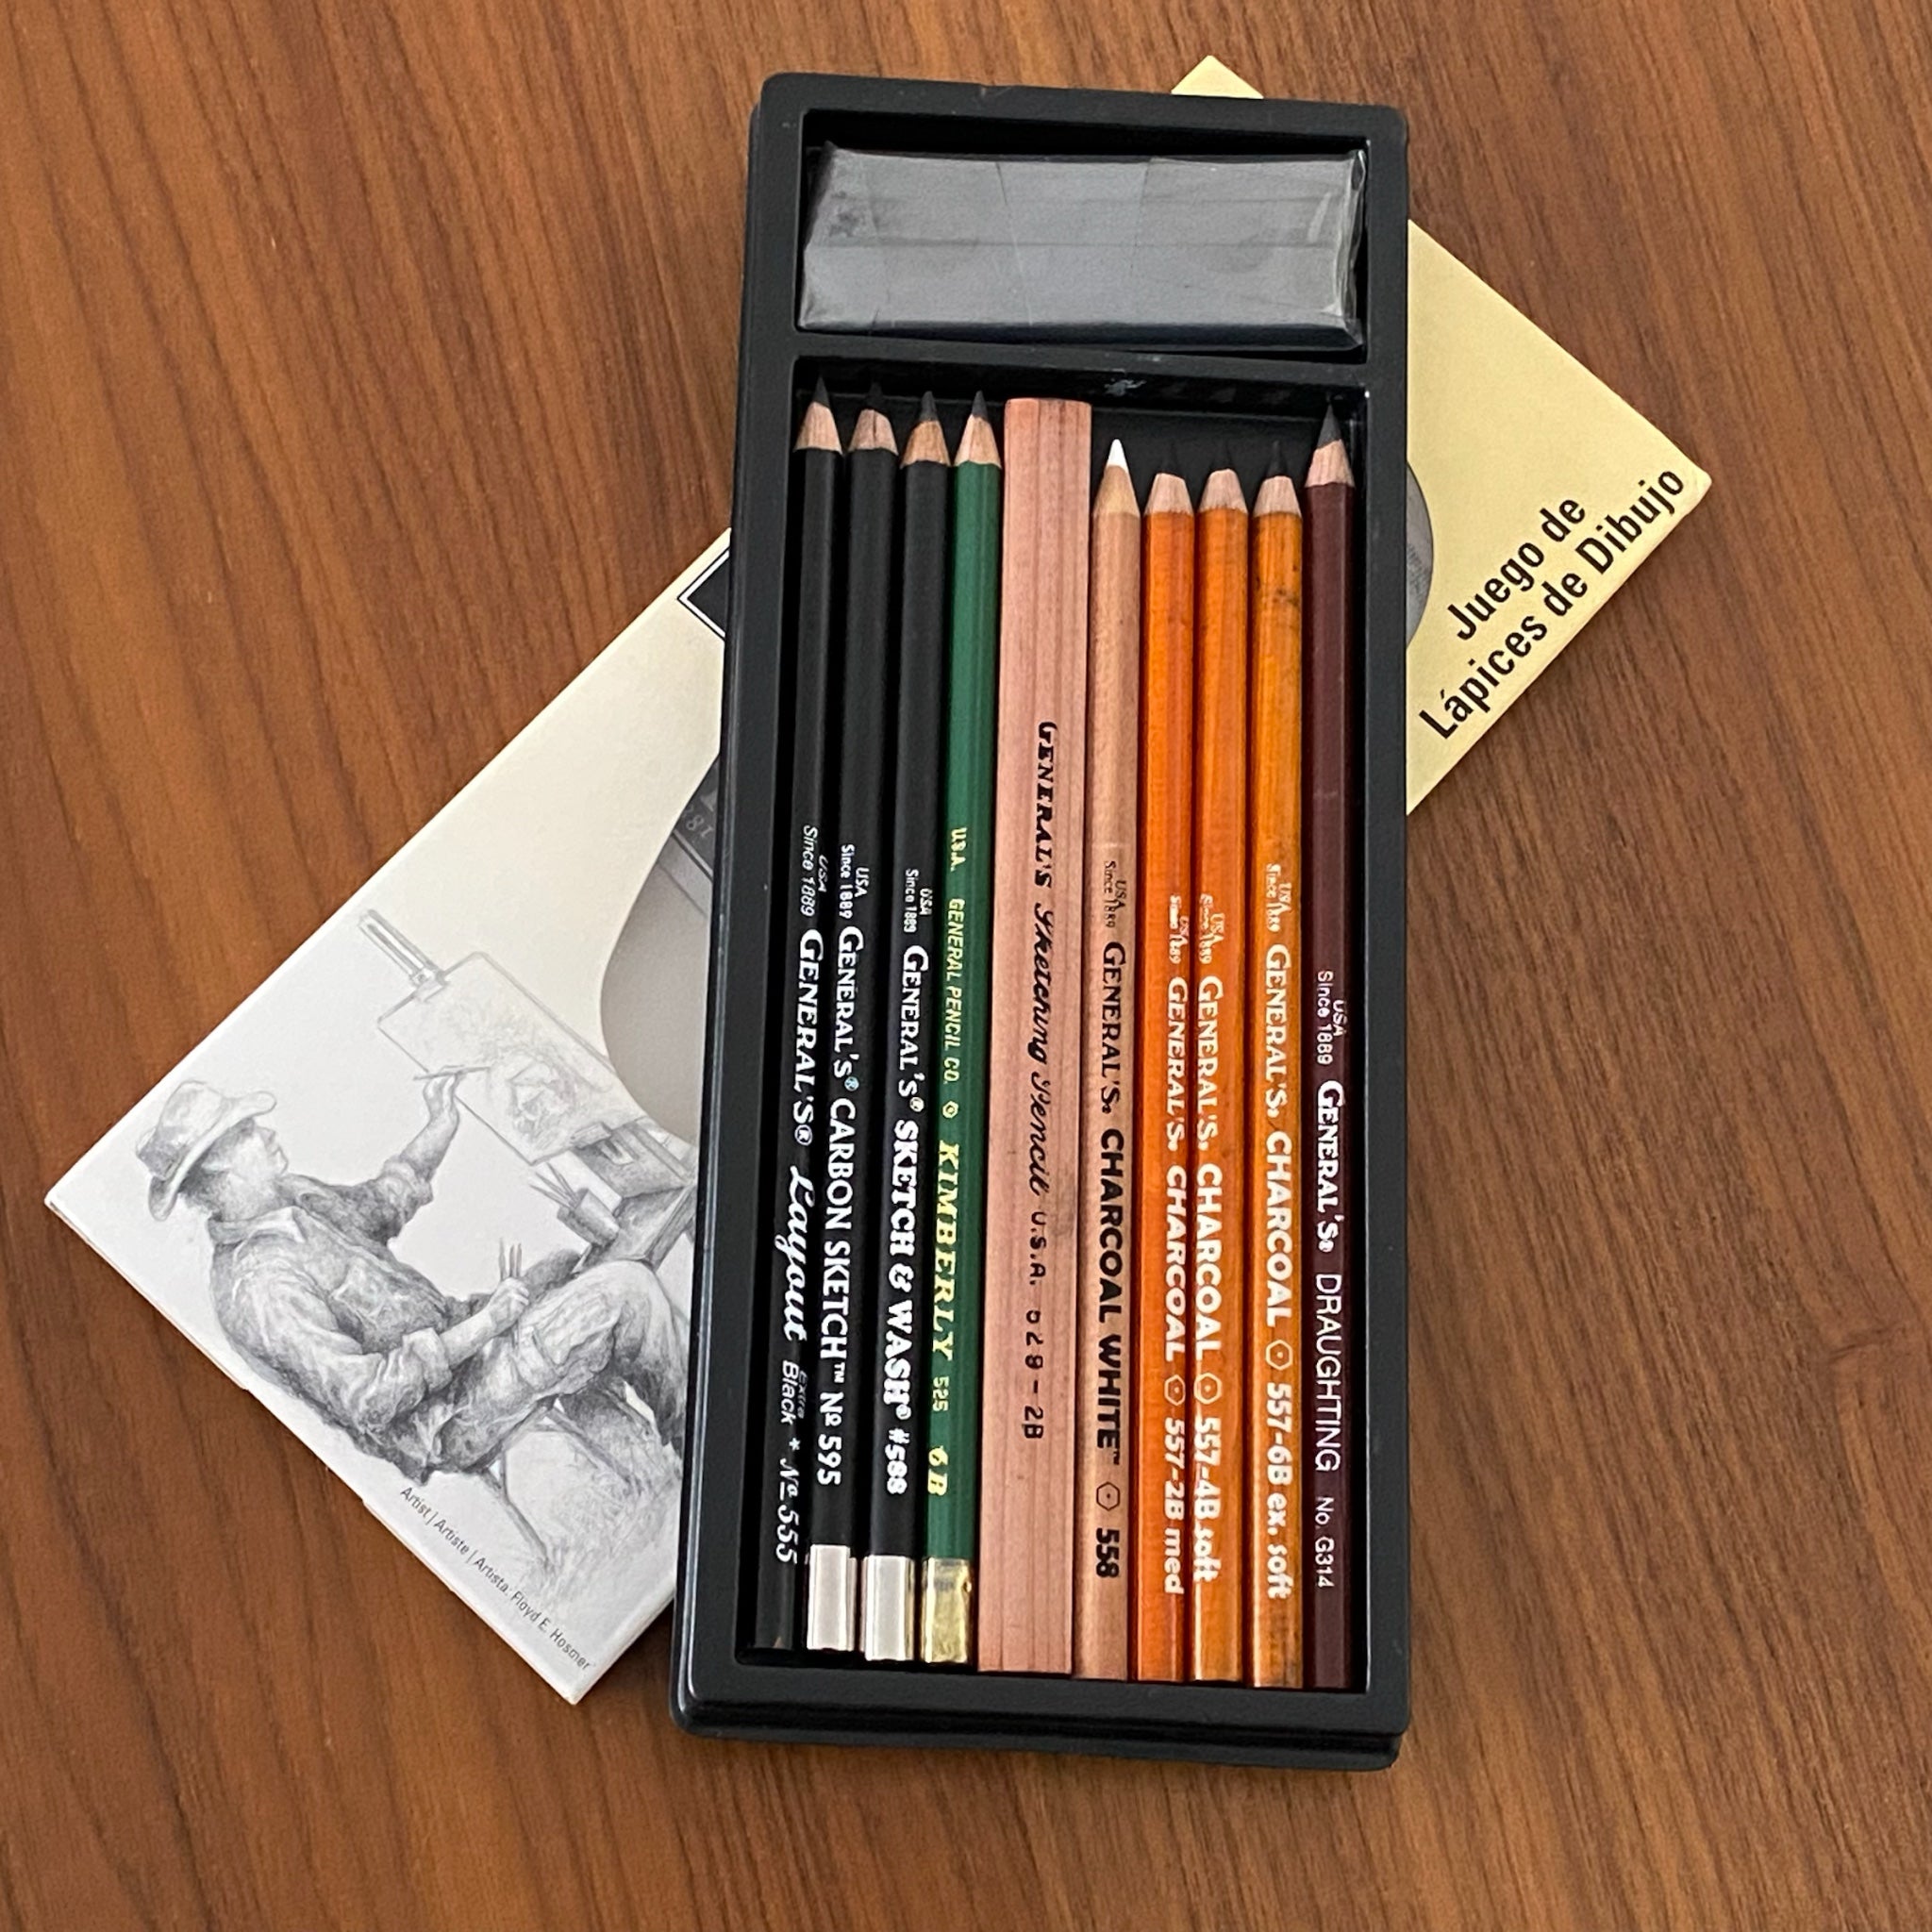 Crayon graphite 5H - Kimberly 525 - General Pencil Company